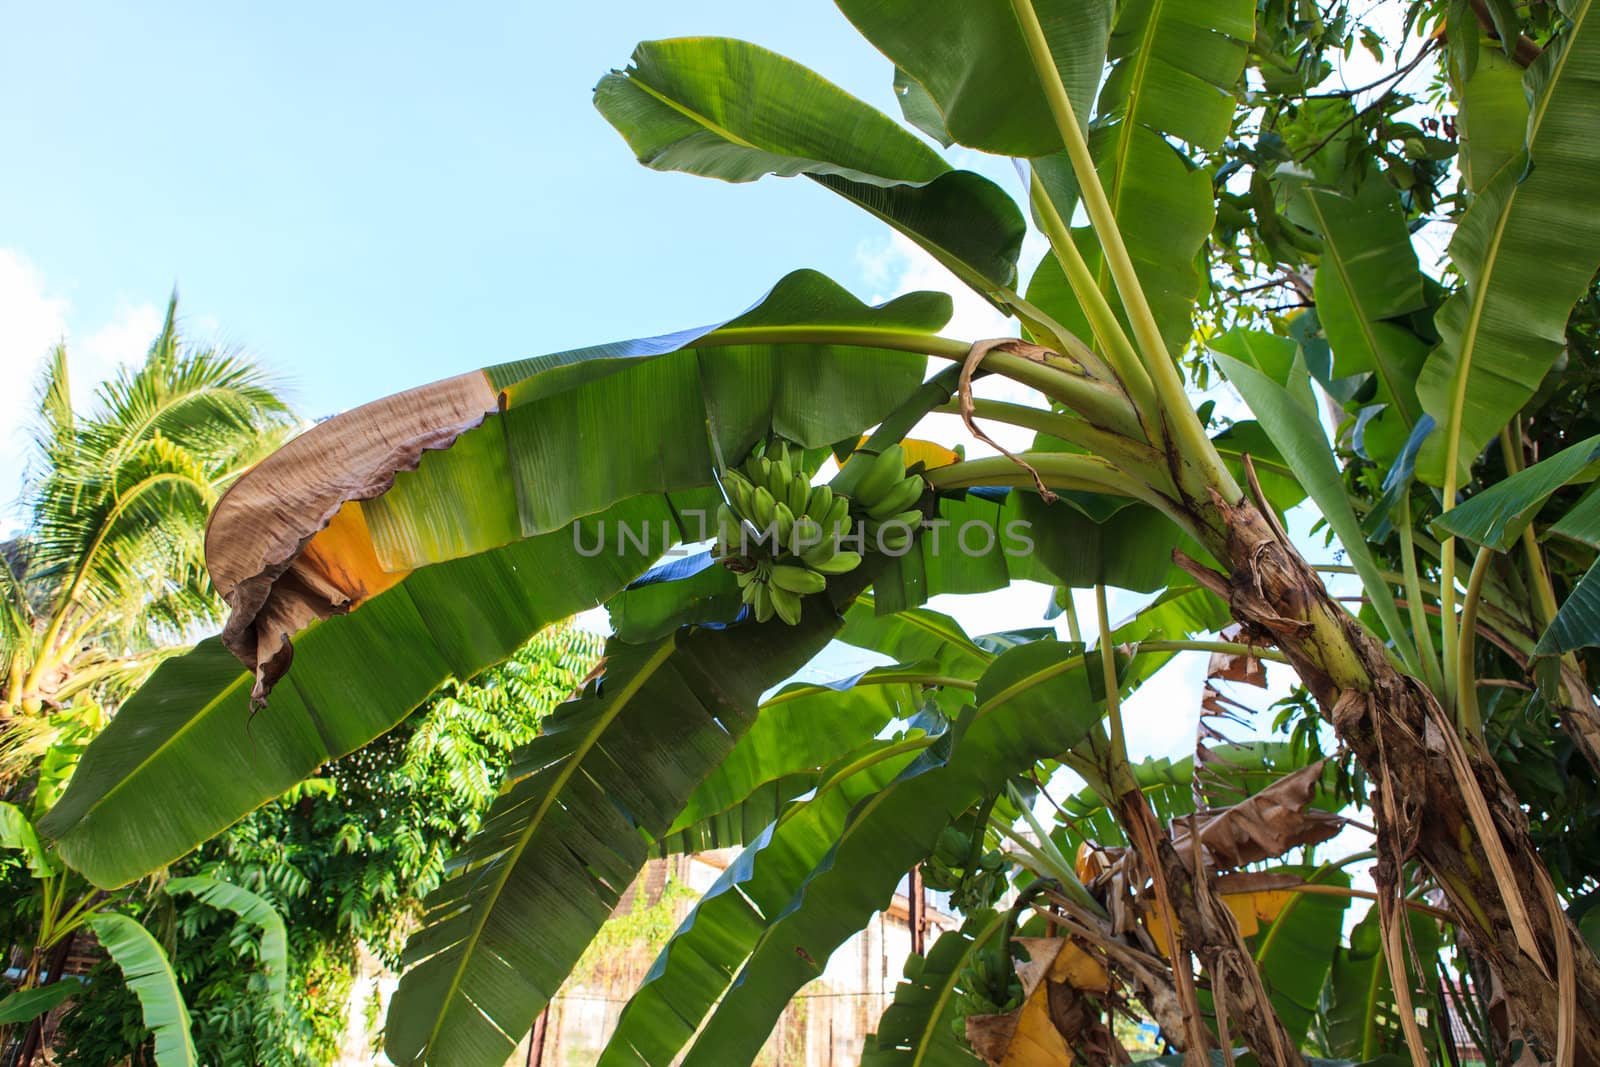 Bunch of ripening bananas on tree